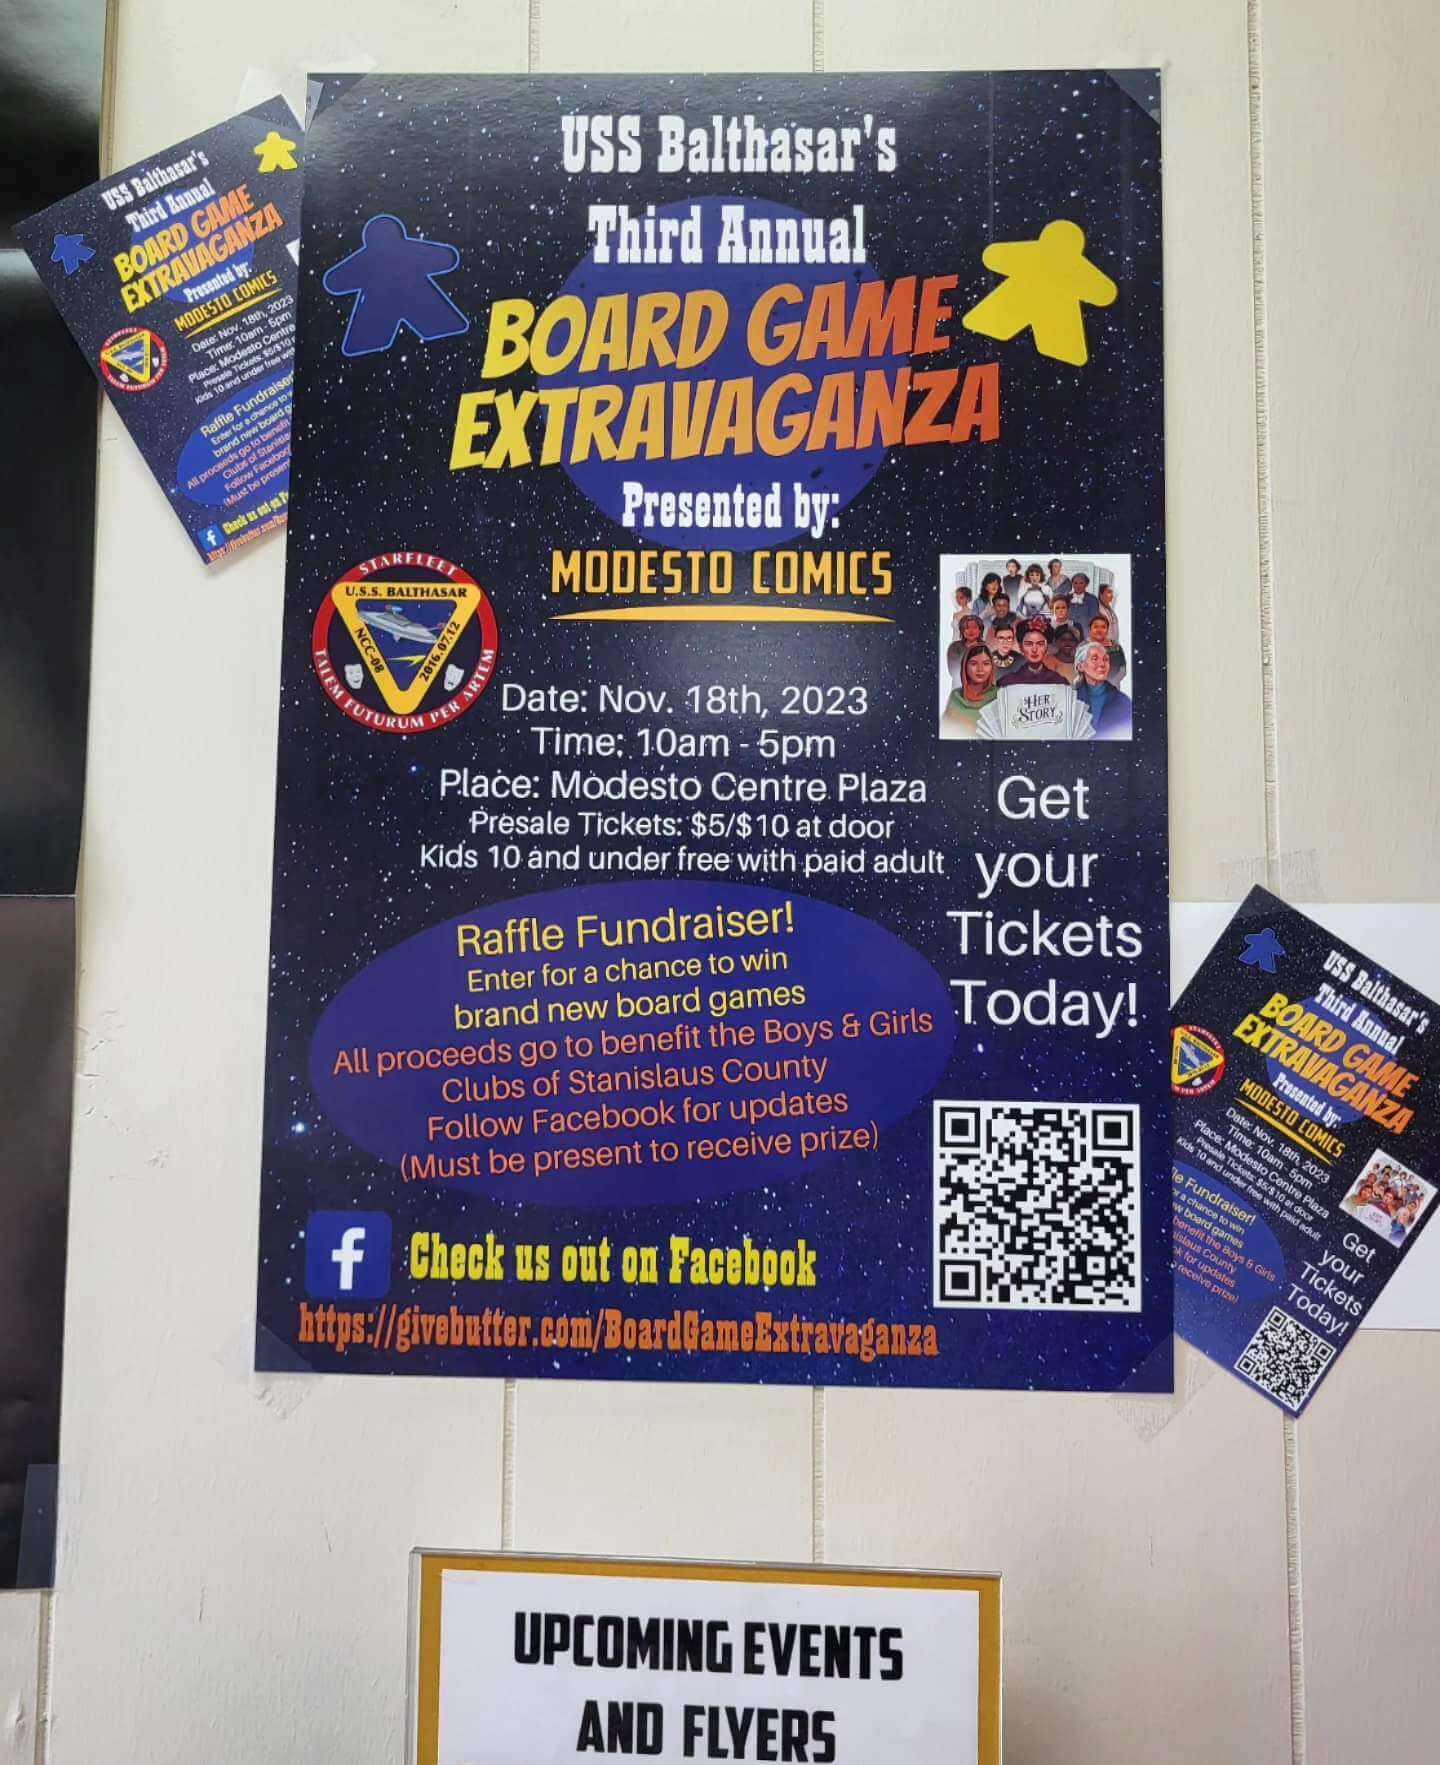 USS Balthasar's Board Game Extravaganza Presented by Modesto Comics